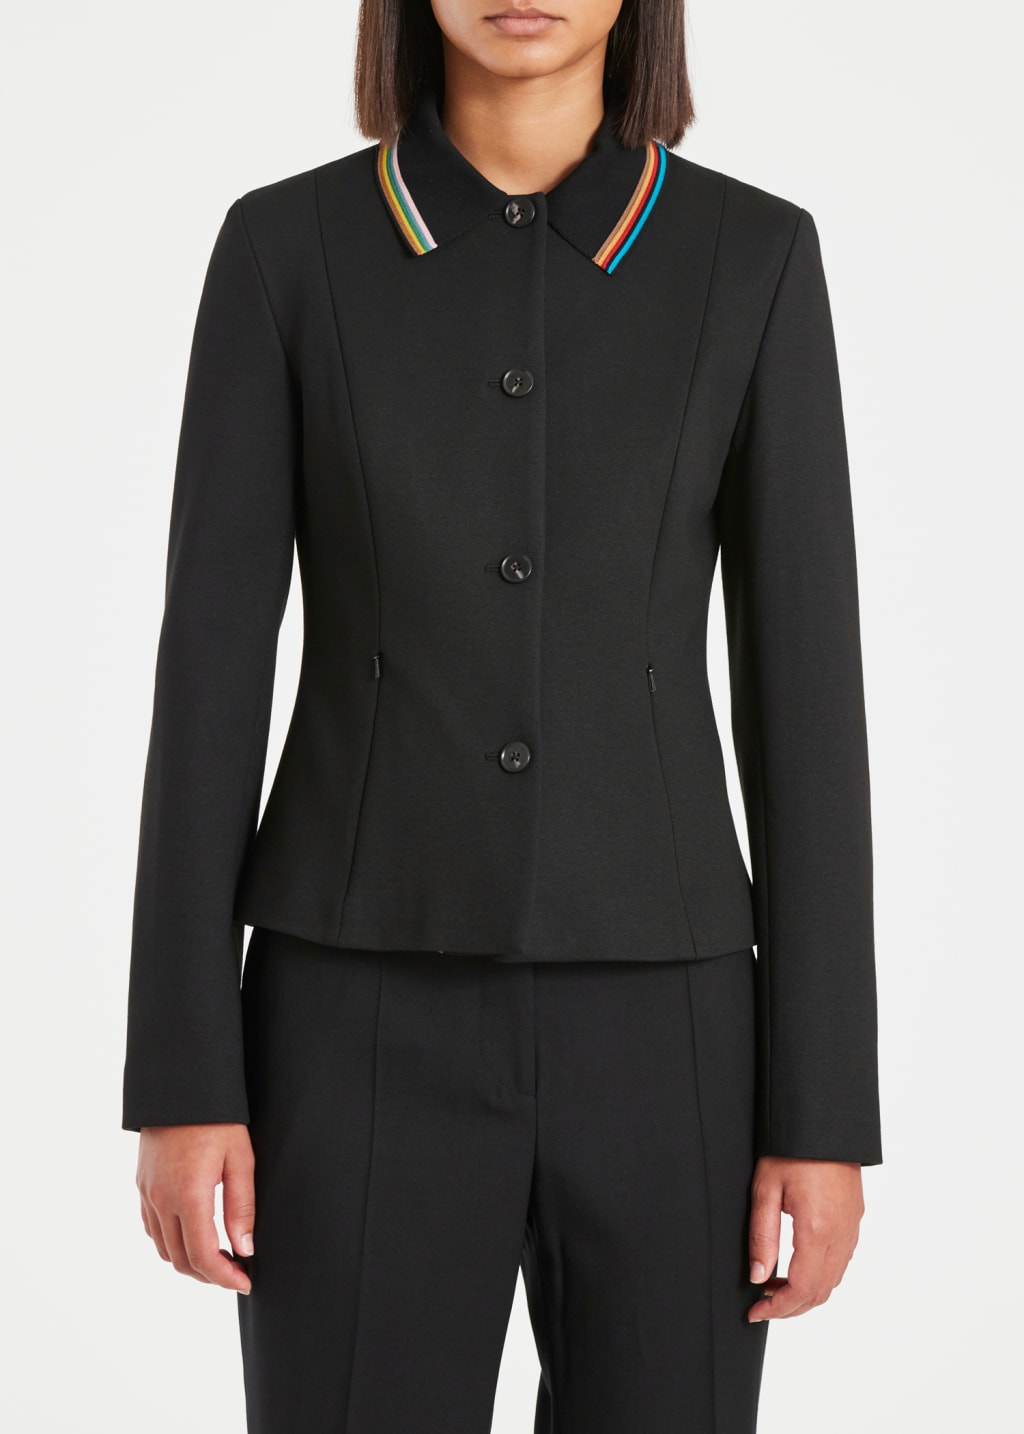 Model View - Women's Black 'Signature Stripe' Trim Jacket by Paul Smith